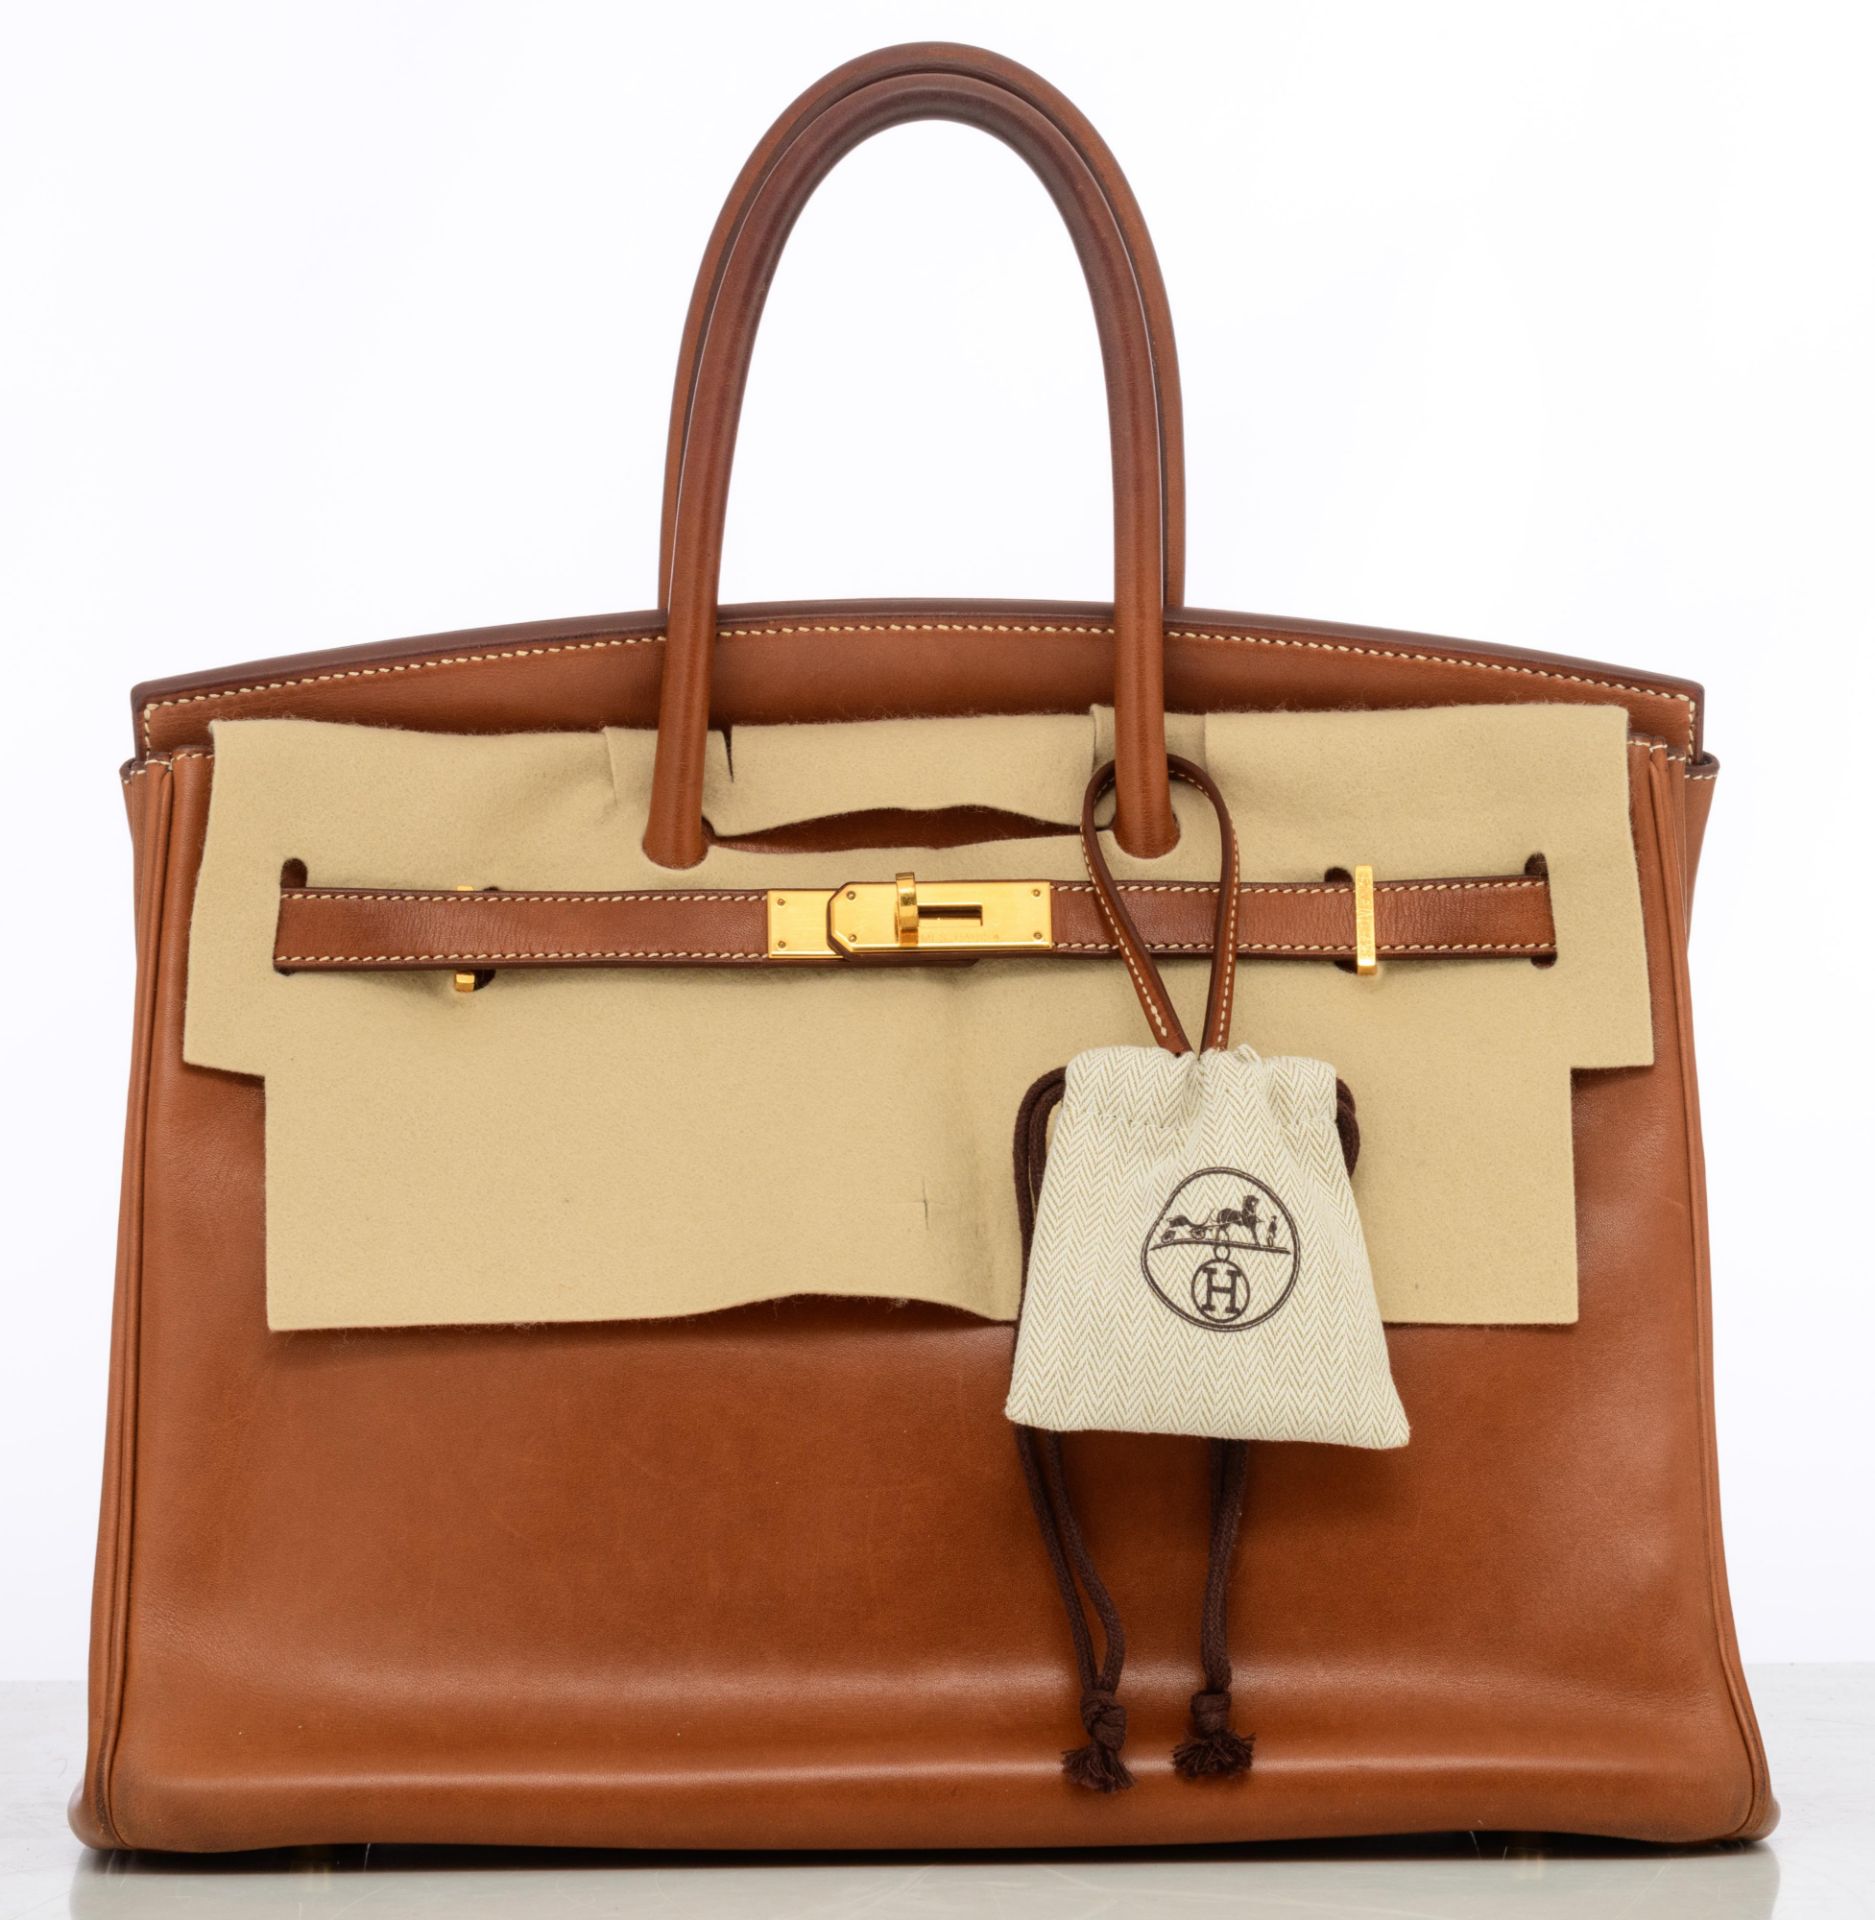 HERMÈS, Birkin 35 bag, Gold Barenia calfskin leather, with gilt metal hardware - Image 9 of 23